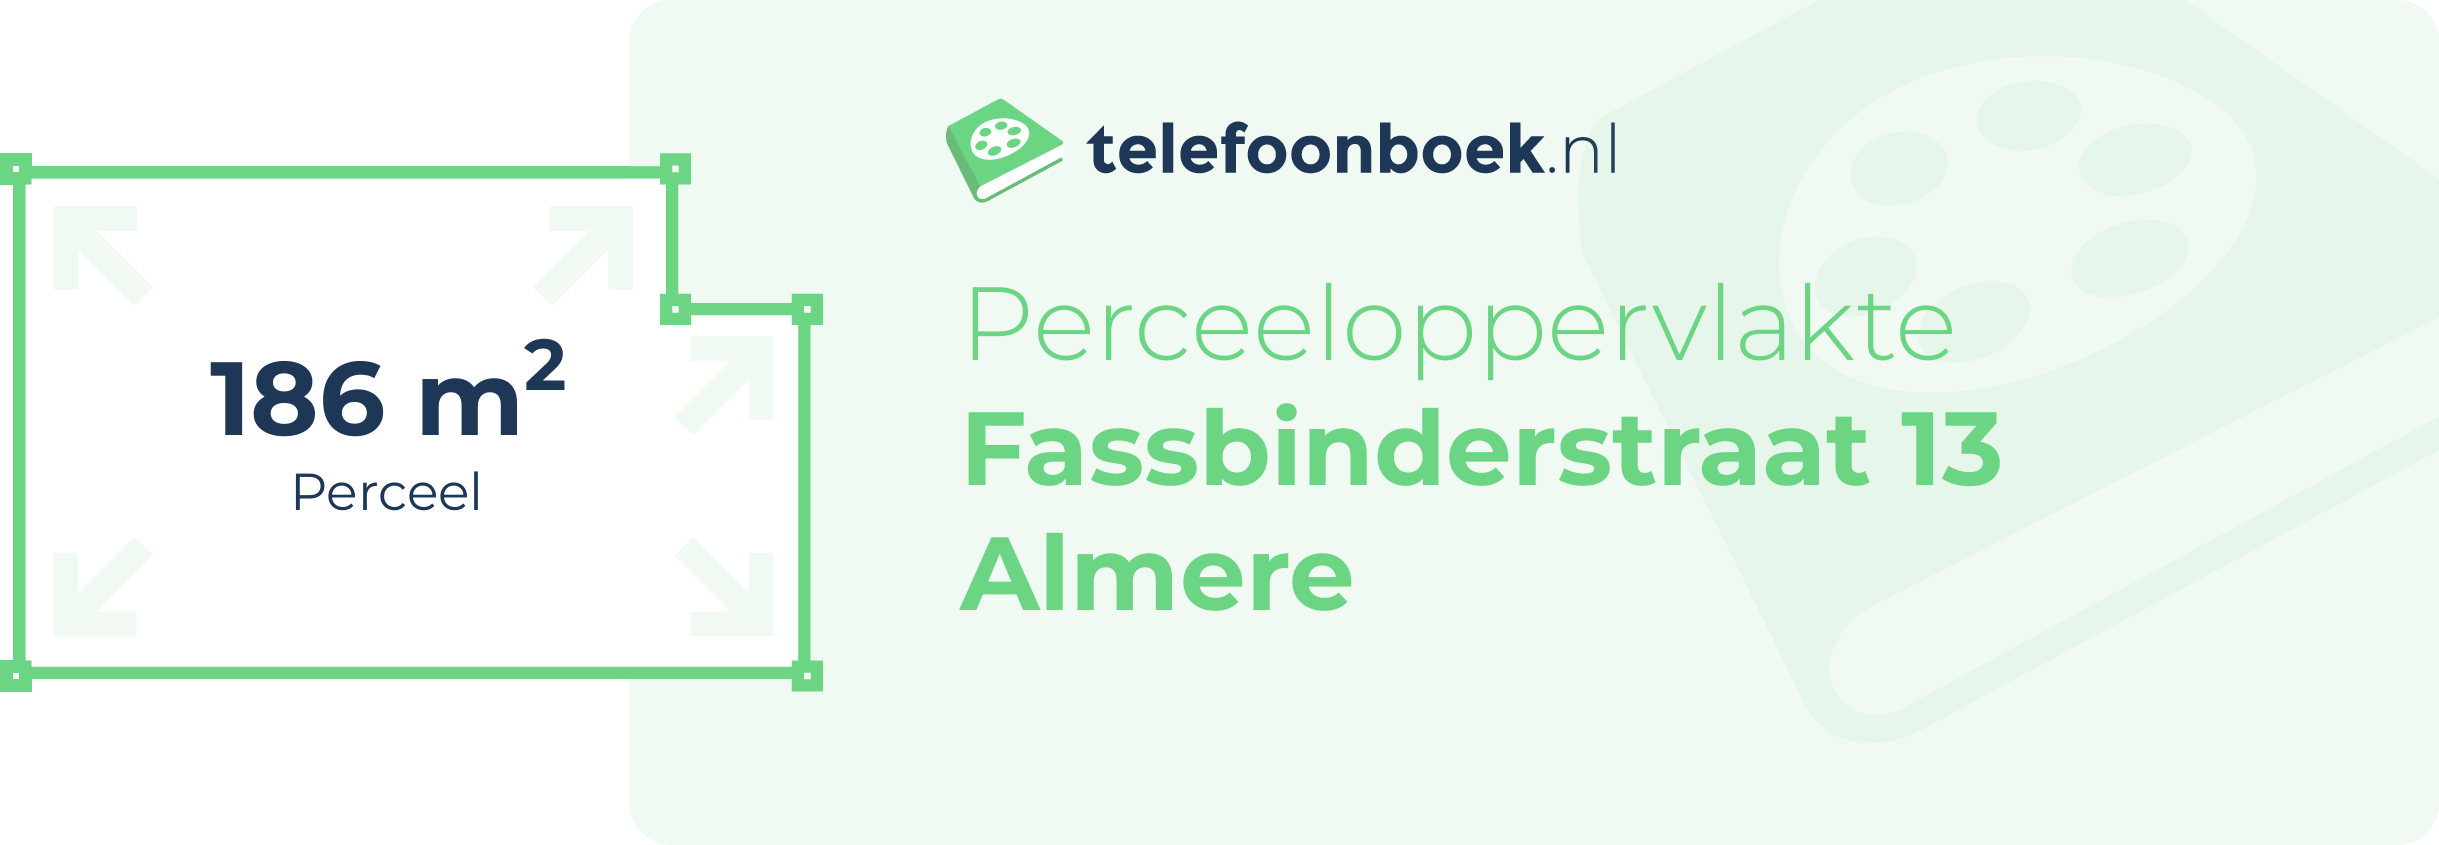 Perceeloppervlakte Fassbinderstraat 13 Almere